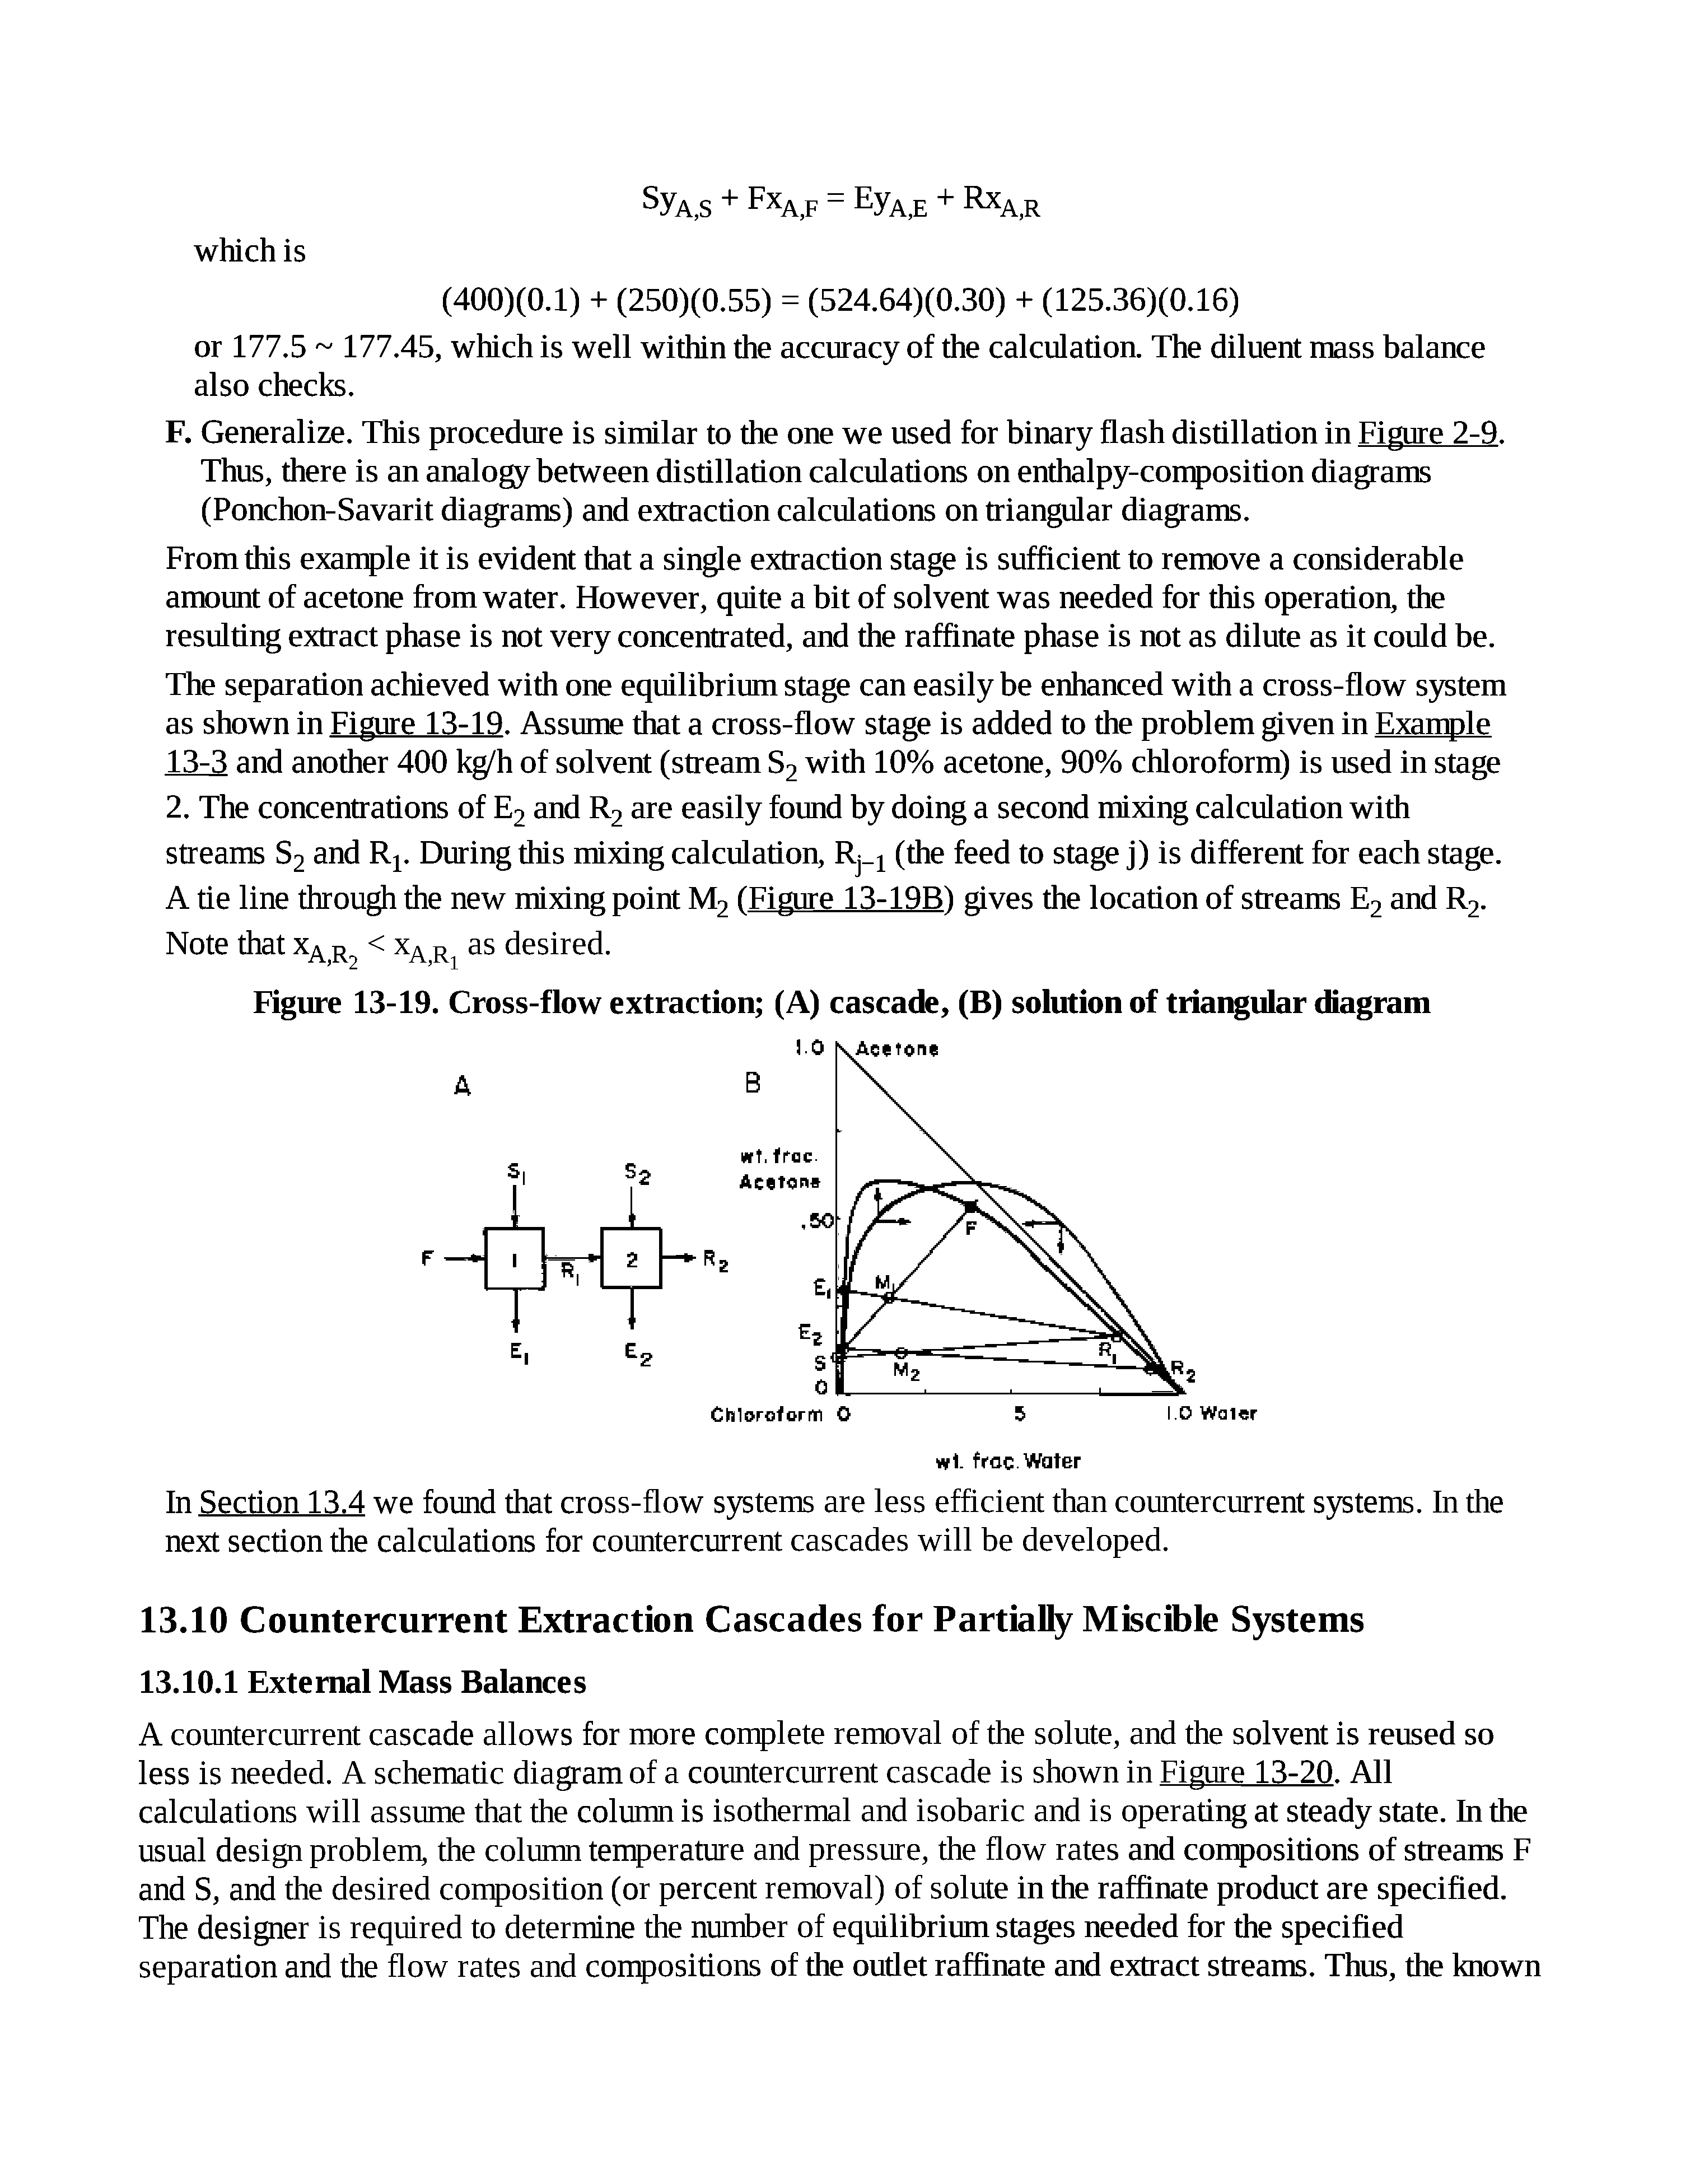 Figure 13-19. Cross-flow extraction (A) cascade, (B) solution of triai ular diagram...